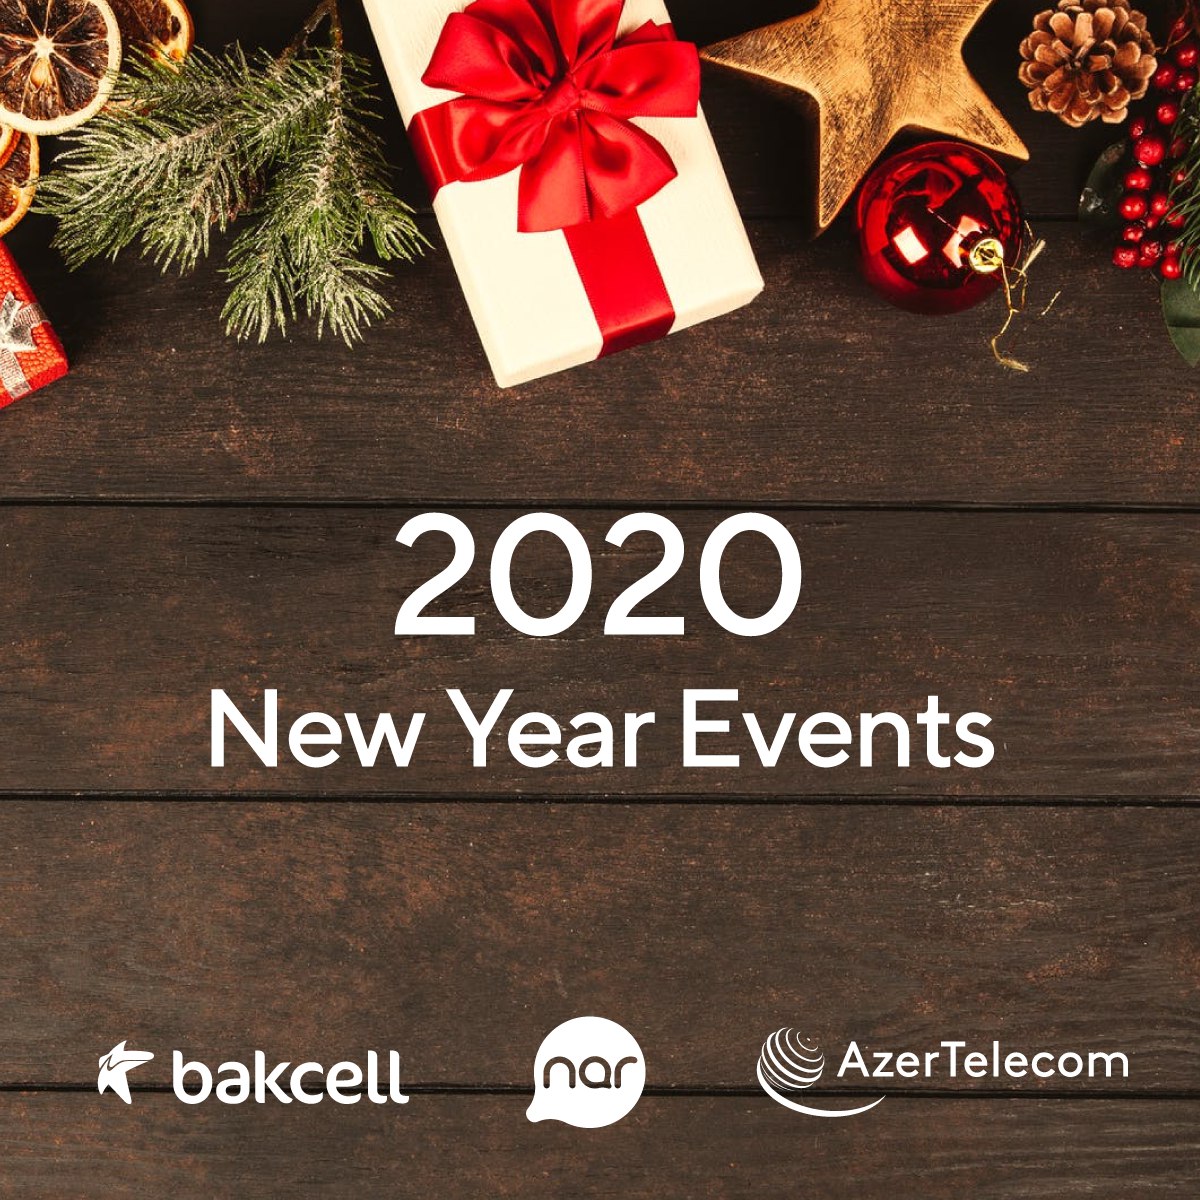 New Year (Bakcel, Nar, Azerconnect)